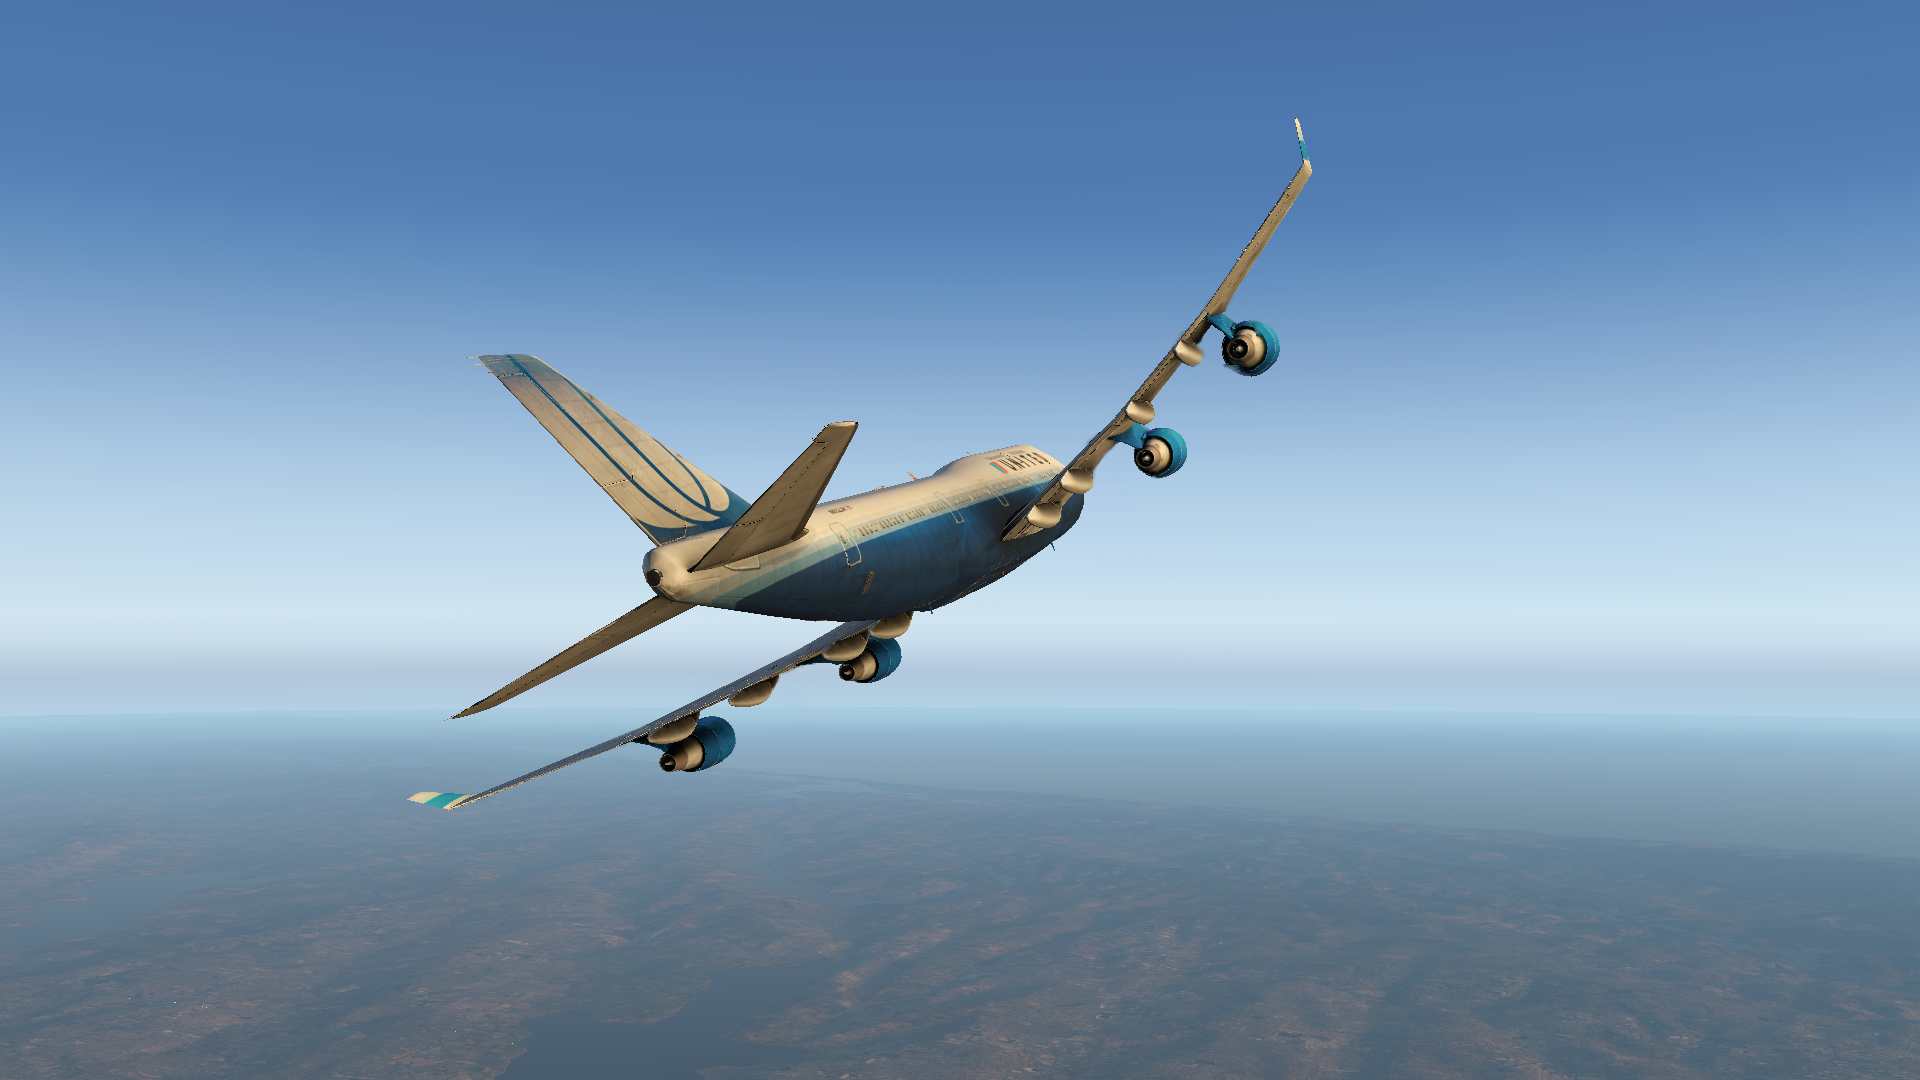 flight simulator x plane 11